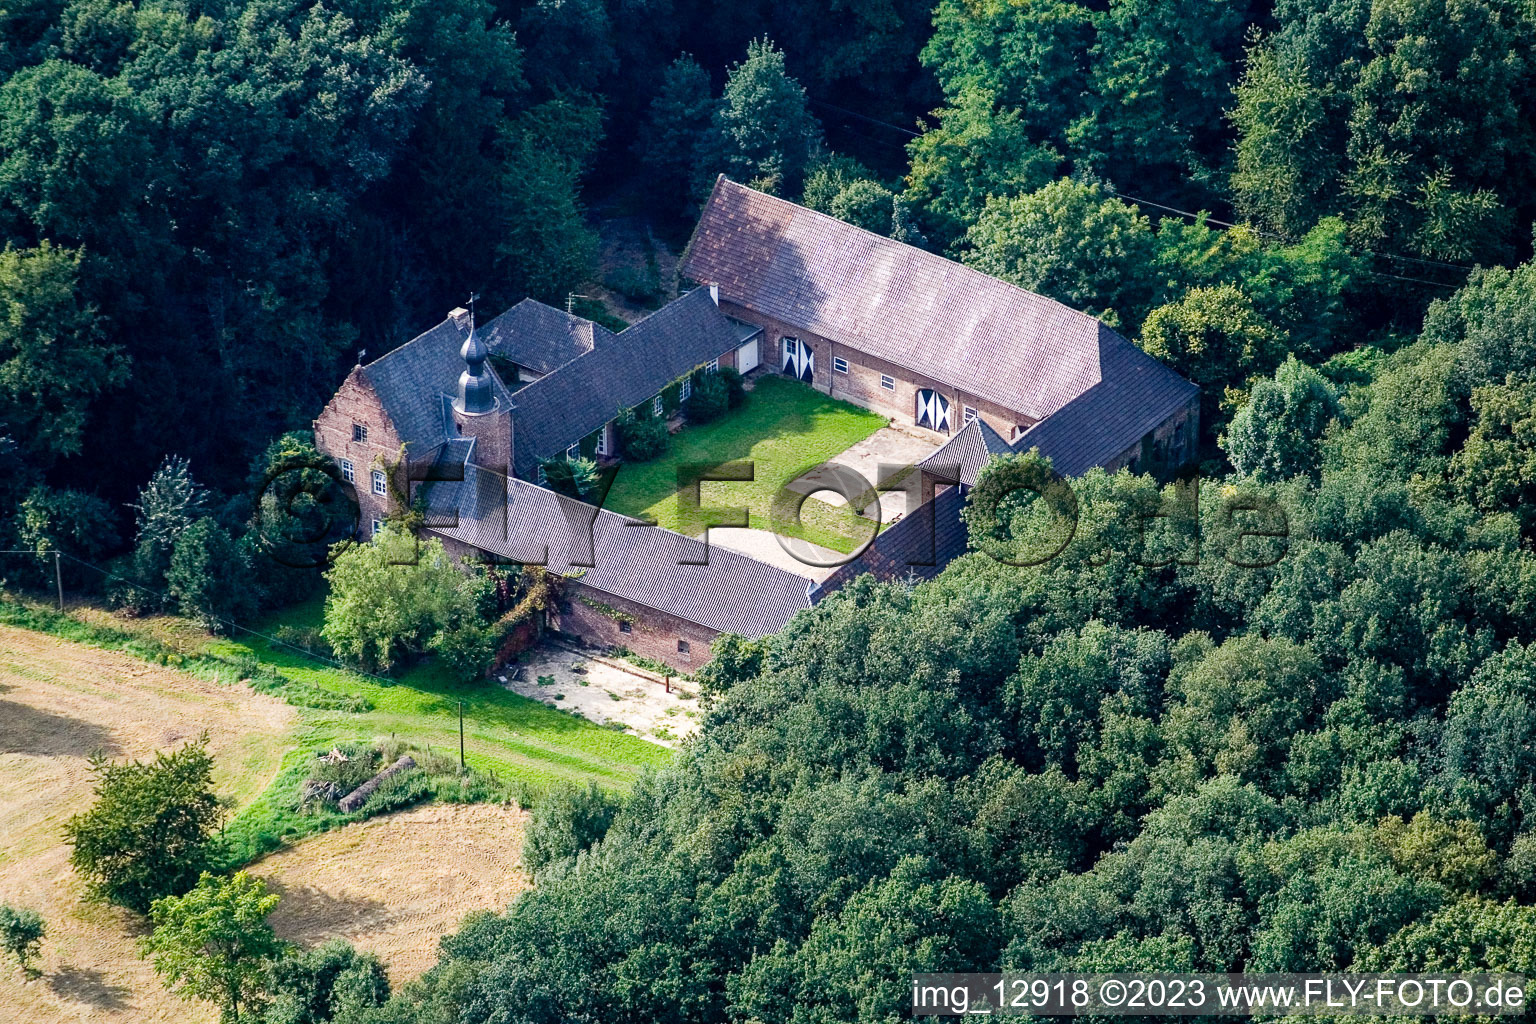 Between Kerken and Limburg in Kerken in the state North Rhine-Westphalia, Germany seen from a drone